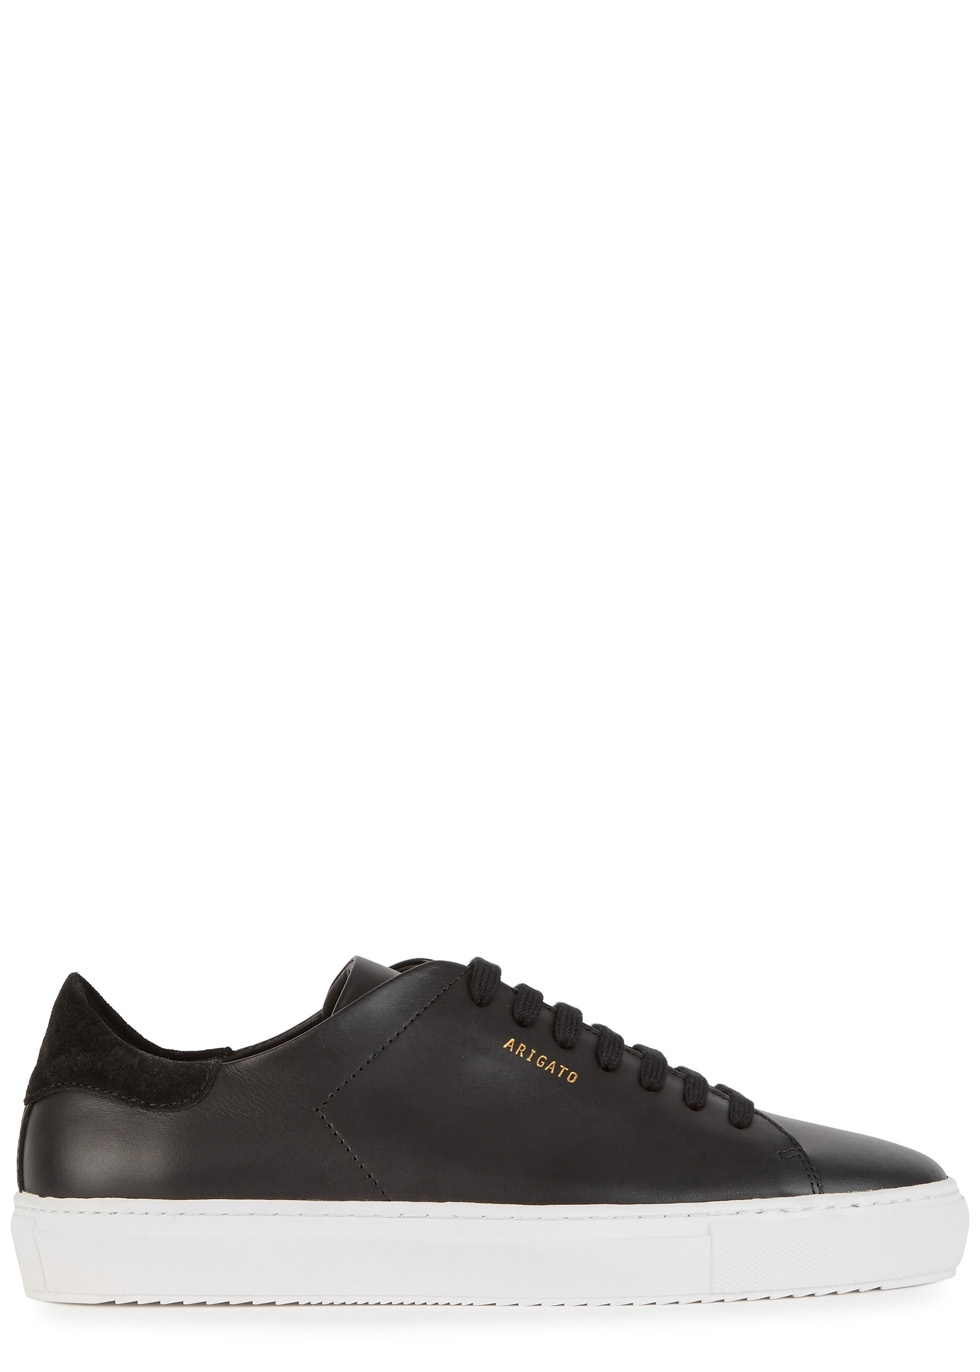 Axel Arigato Clean 90 black leather trainers - Harvey Nichols